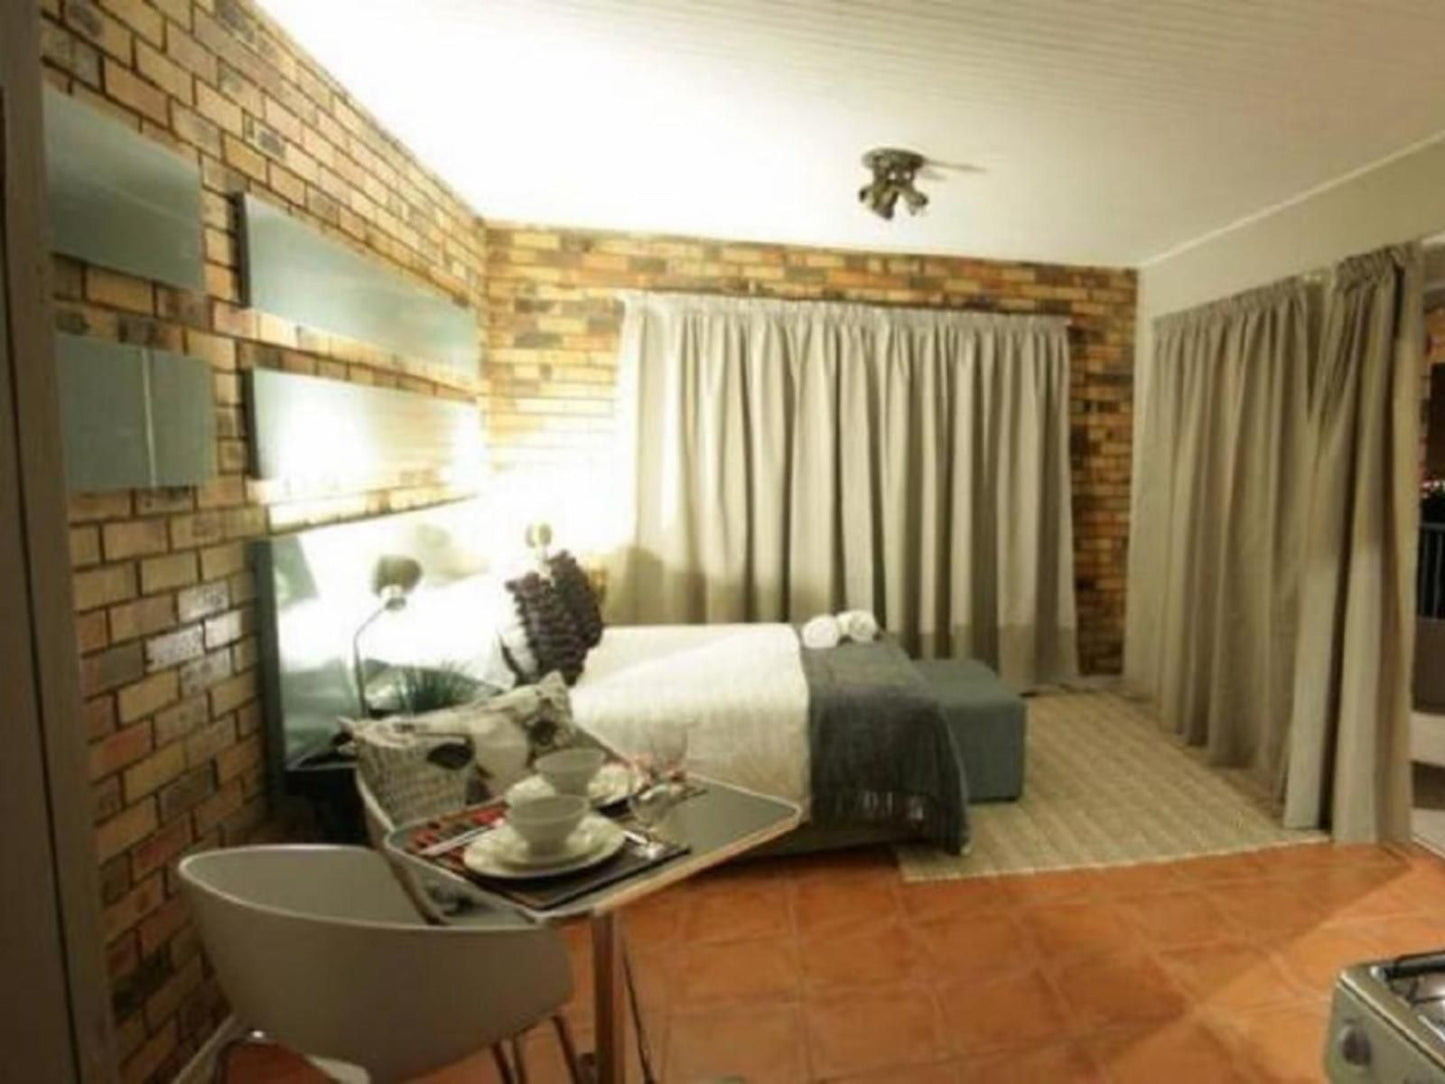 94Onwild Waterkloof Pretoria Tshwane Gauteng South Africa Sepia Tones, Bedroom